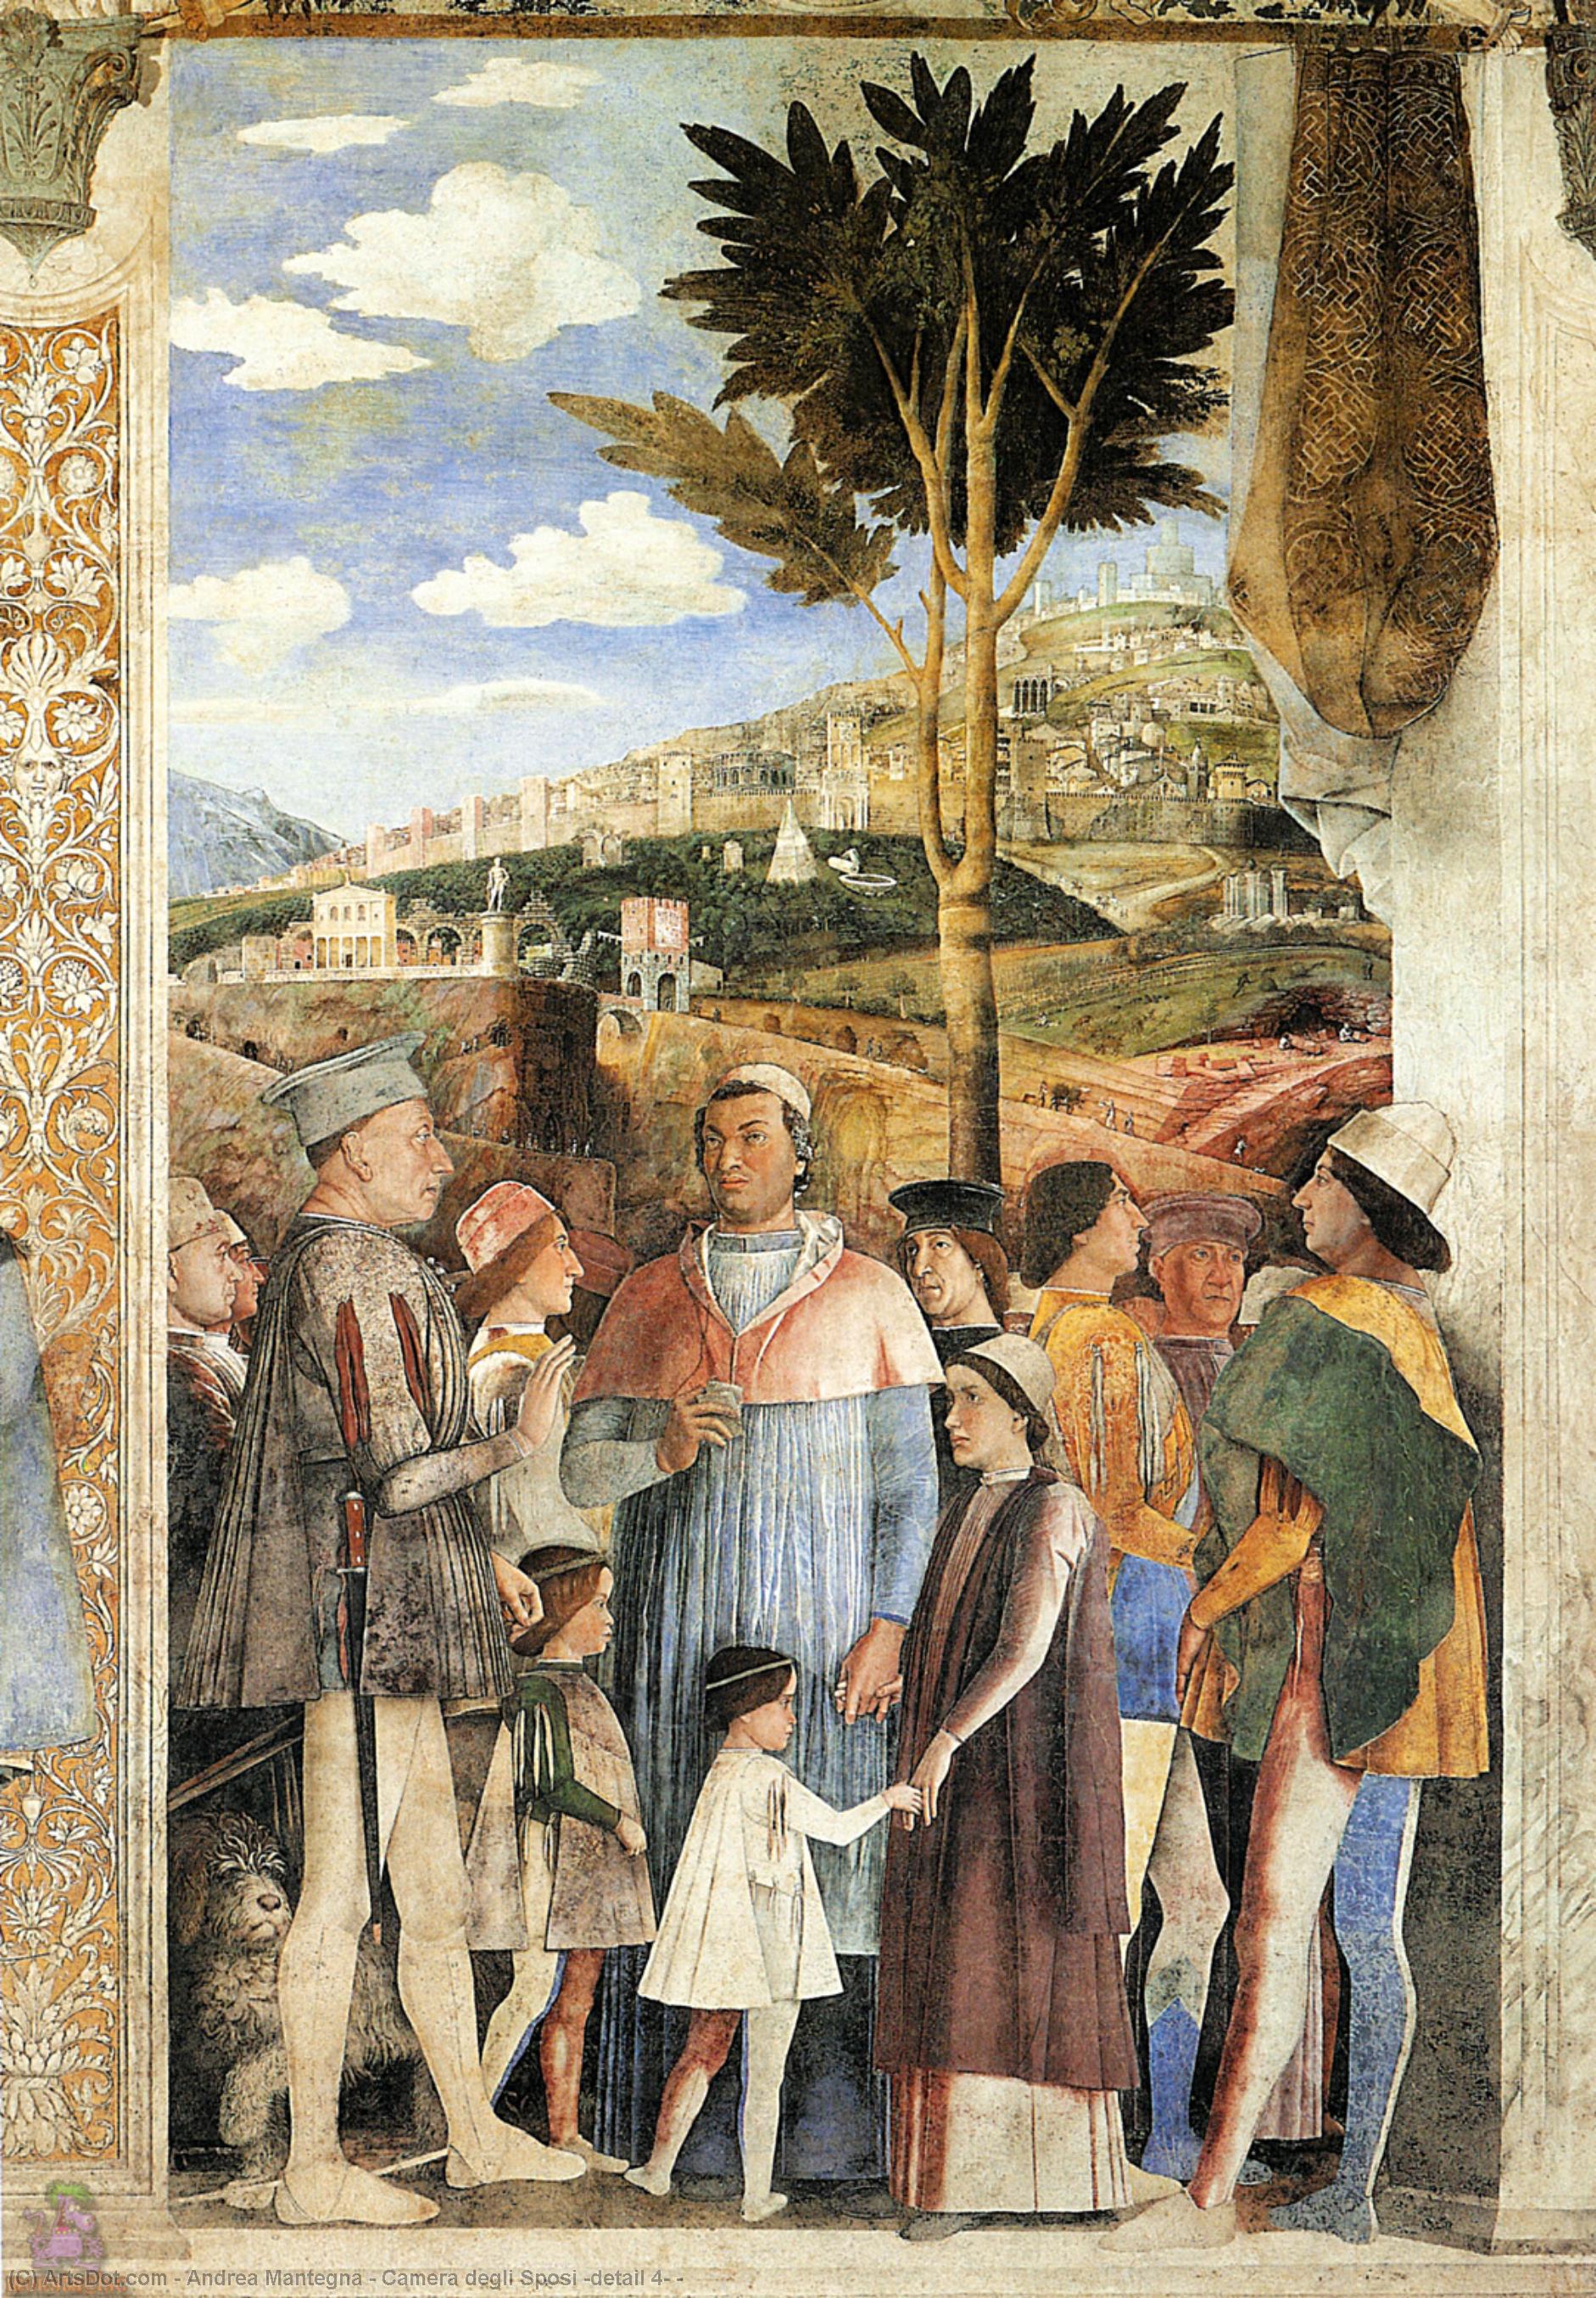 Order Paintings Reproductions Camera degli Sposi (detail 4) -, 1474 by Andrea Mantegna (1431-1506, Italy) | ArtsDot.com